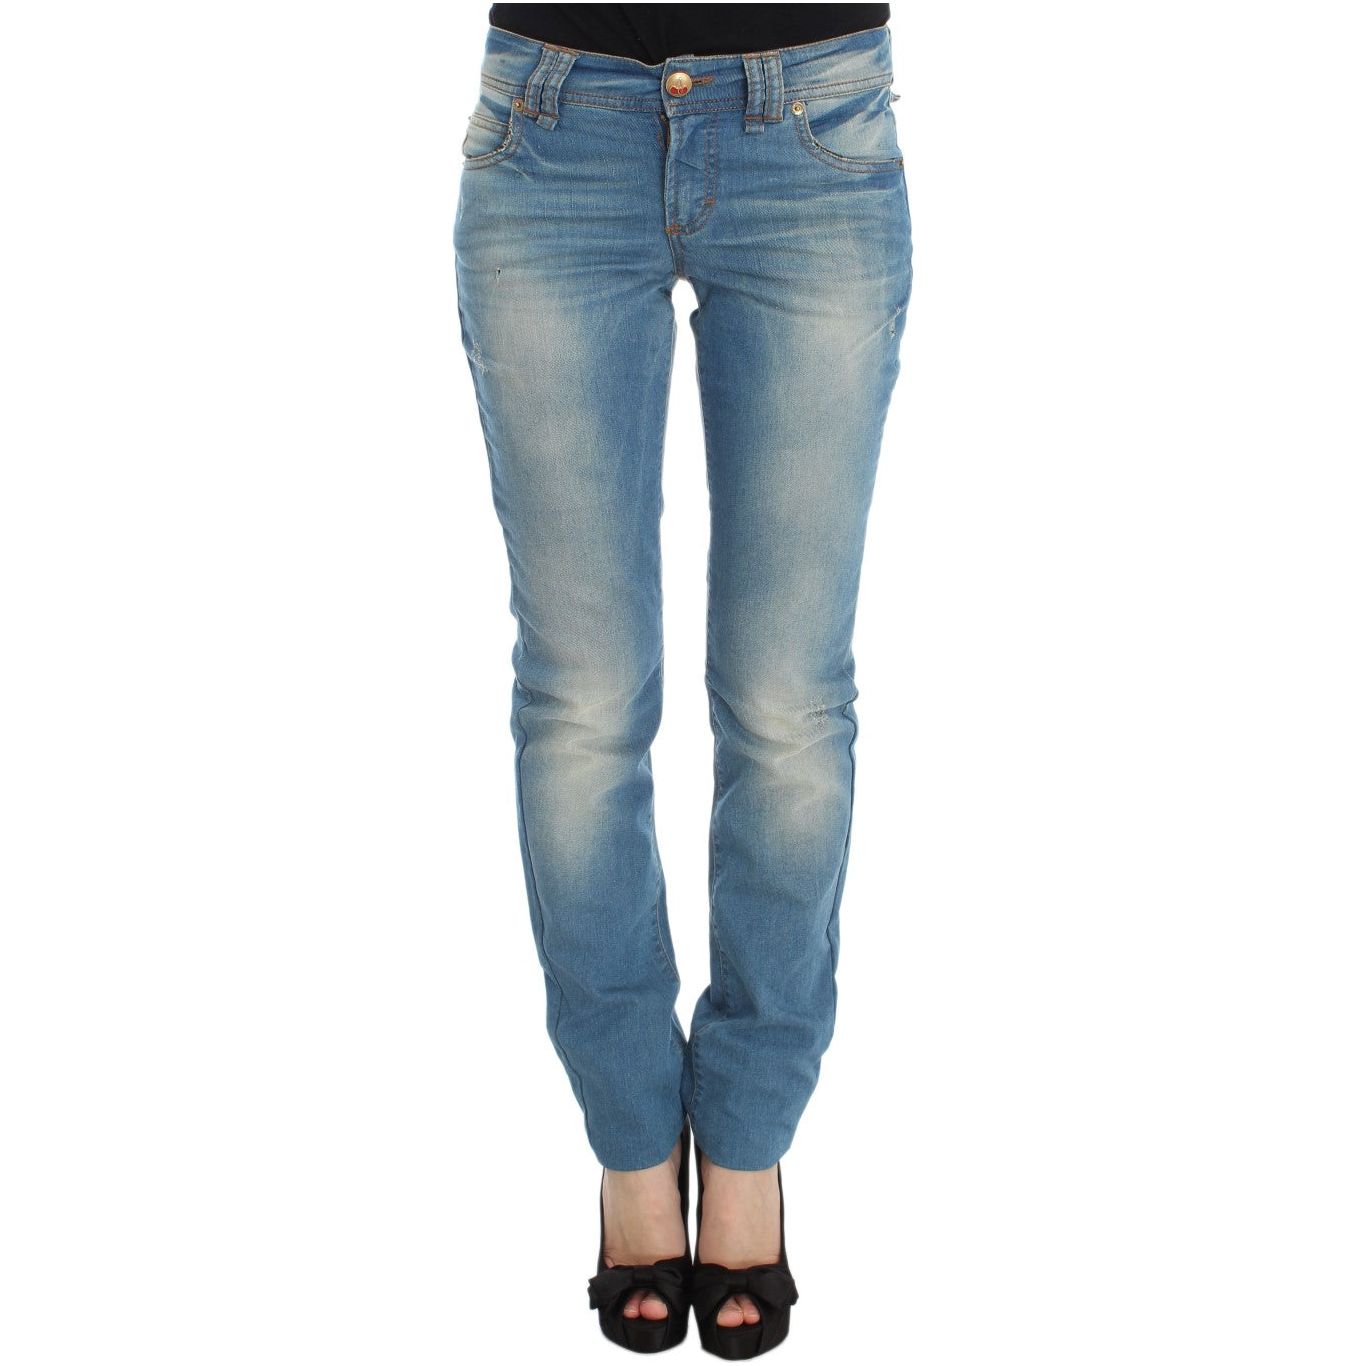 John Galliano Sleek Blue Slim Fit Designer Jeans blue-wash-cotton-blend-slim-fit-jeans-1 329905-blue-wash-cotton-blend-slim-fit-jeans-4.jpg